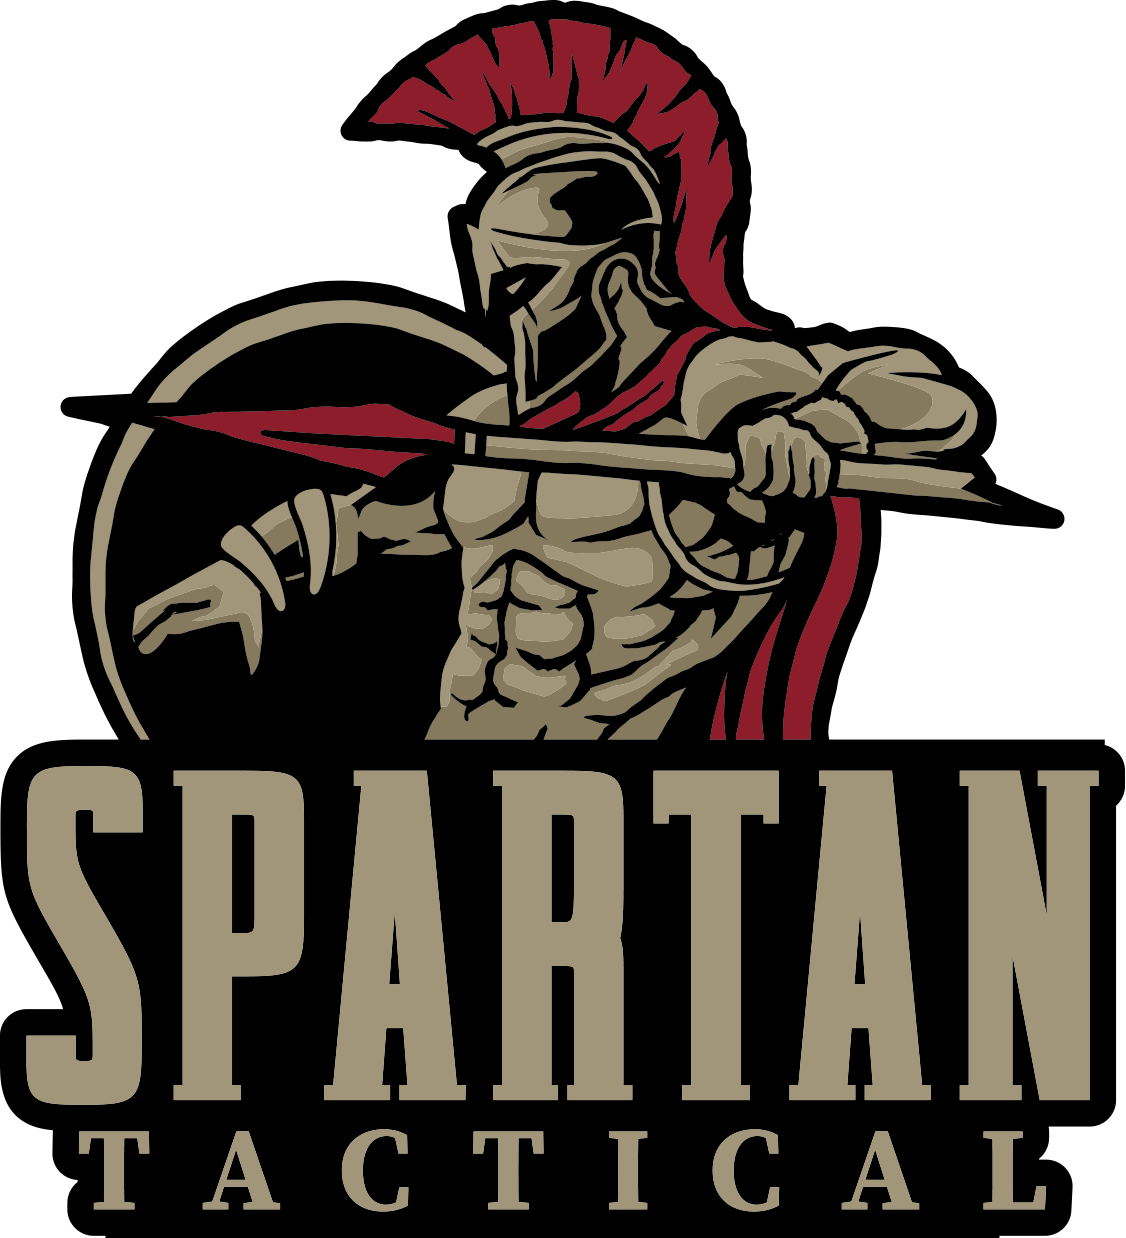 Spartan Firearms & Tactical, Inc. on X: “The Yeti” STI Costa